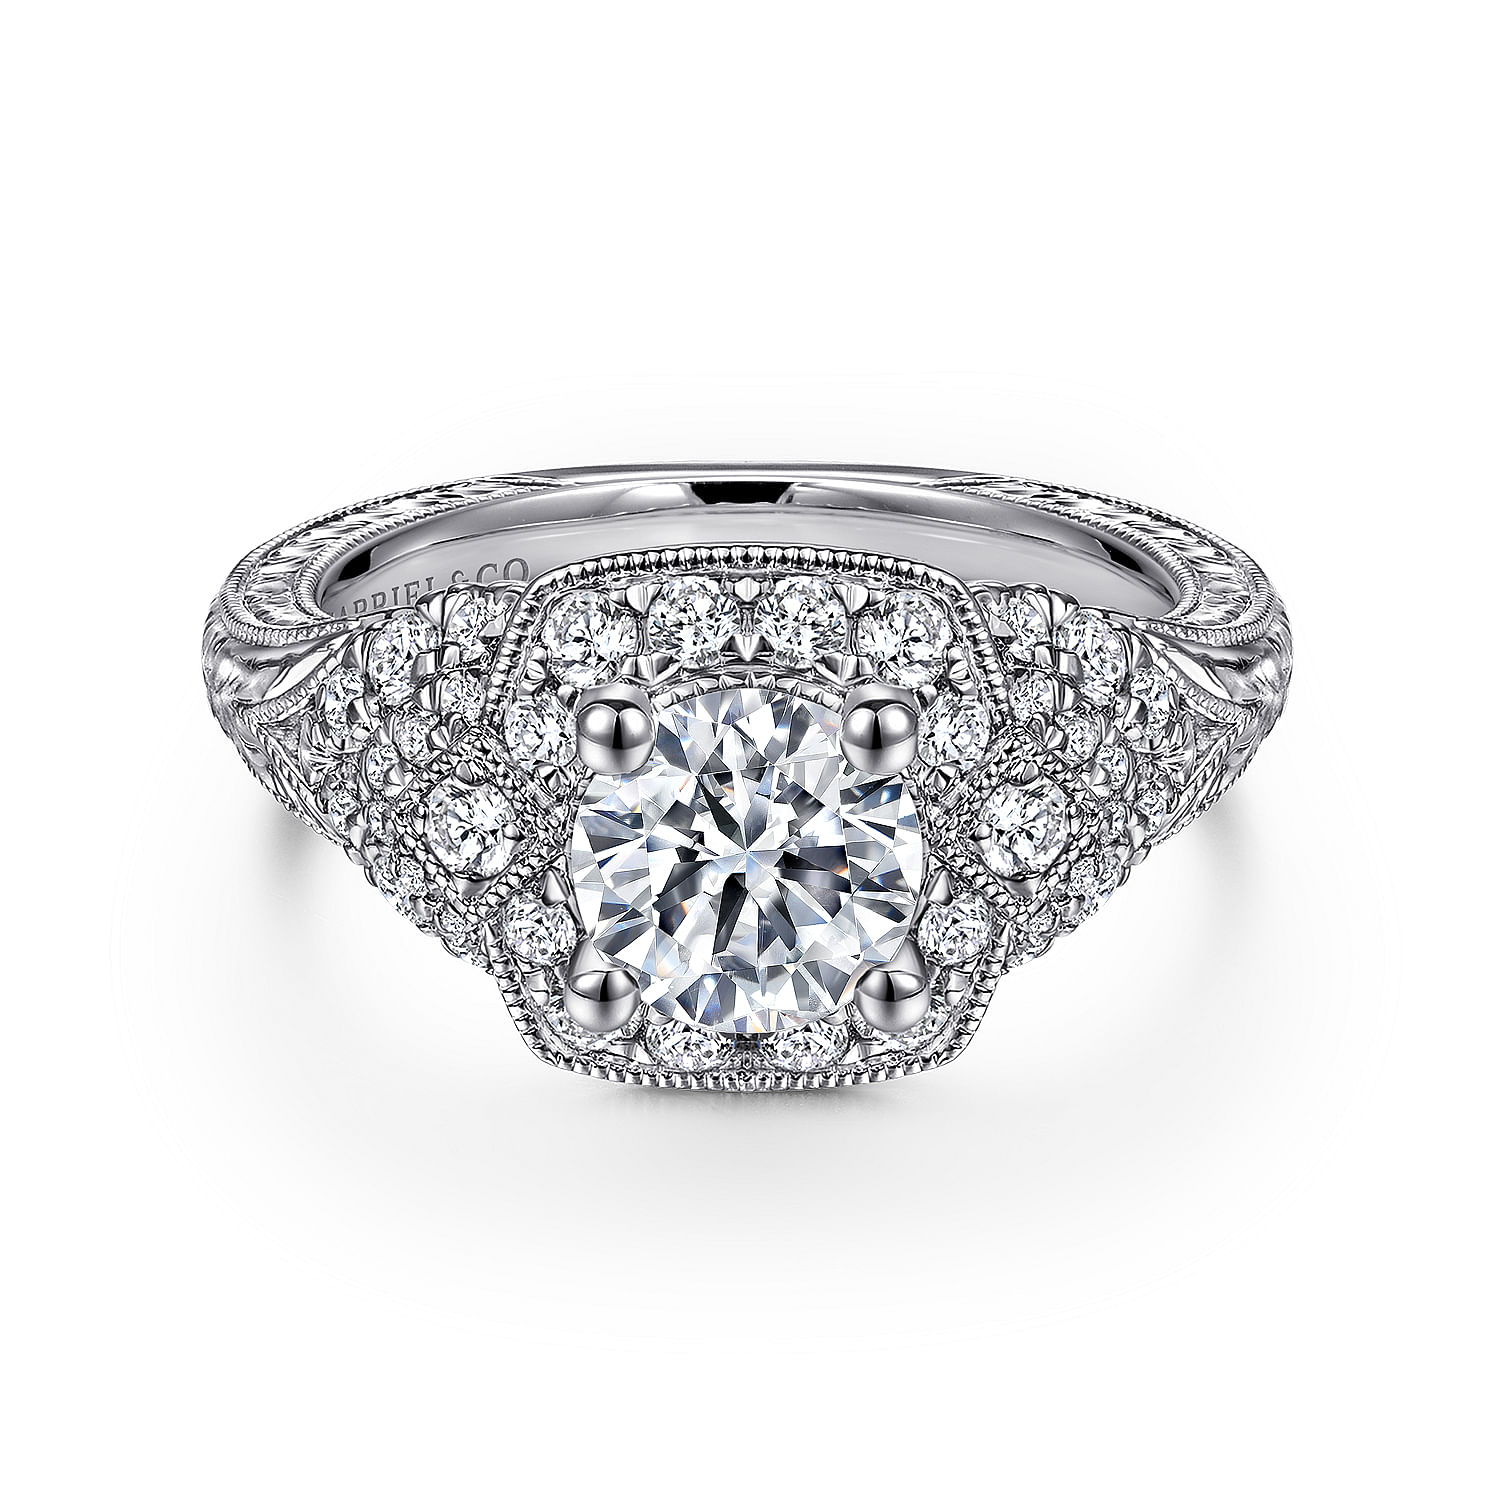 Chandler - Vintage Inspired 14K White Gold Round Halo Diamond Engagement Ring